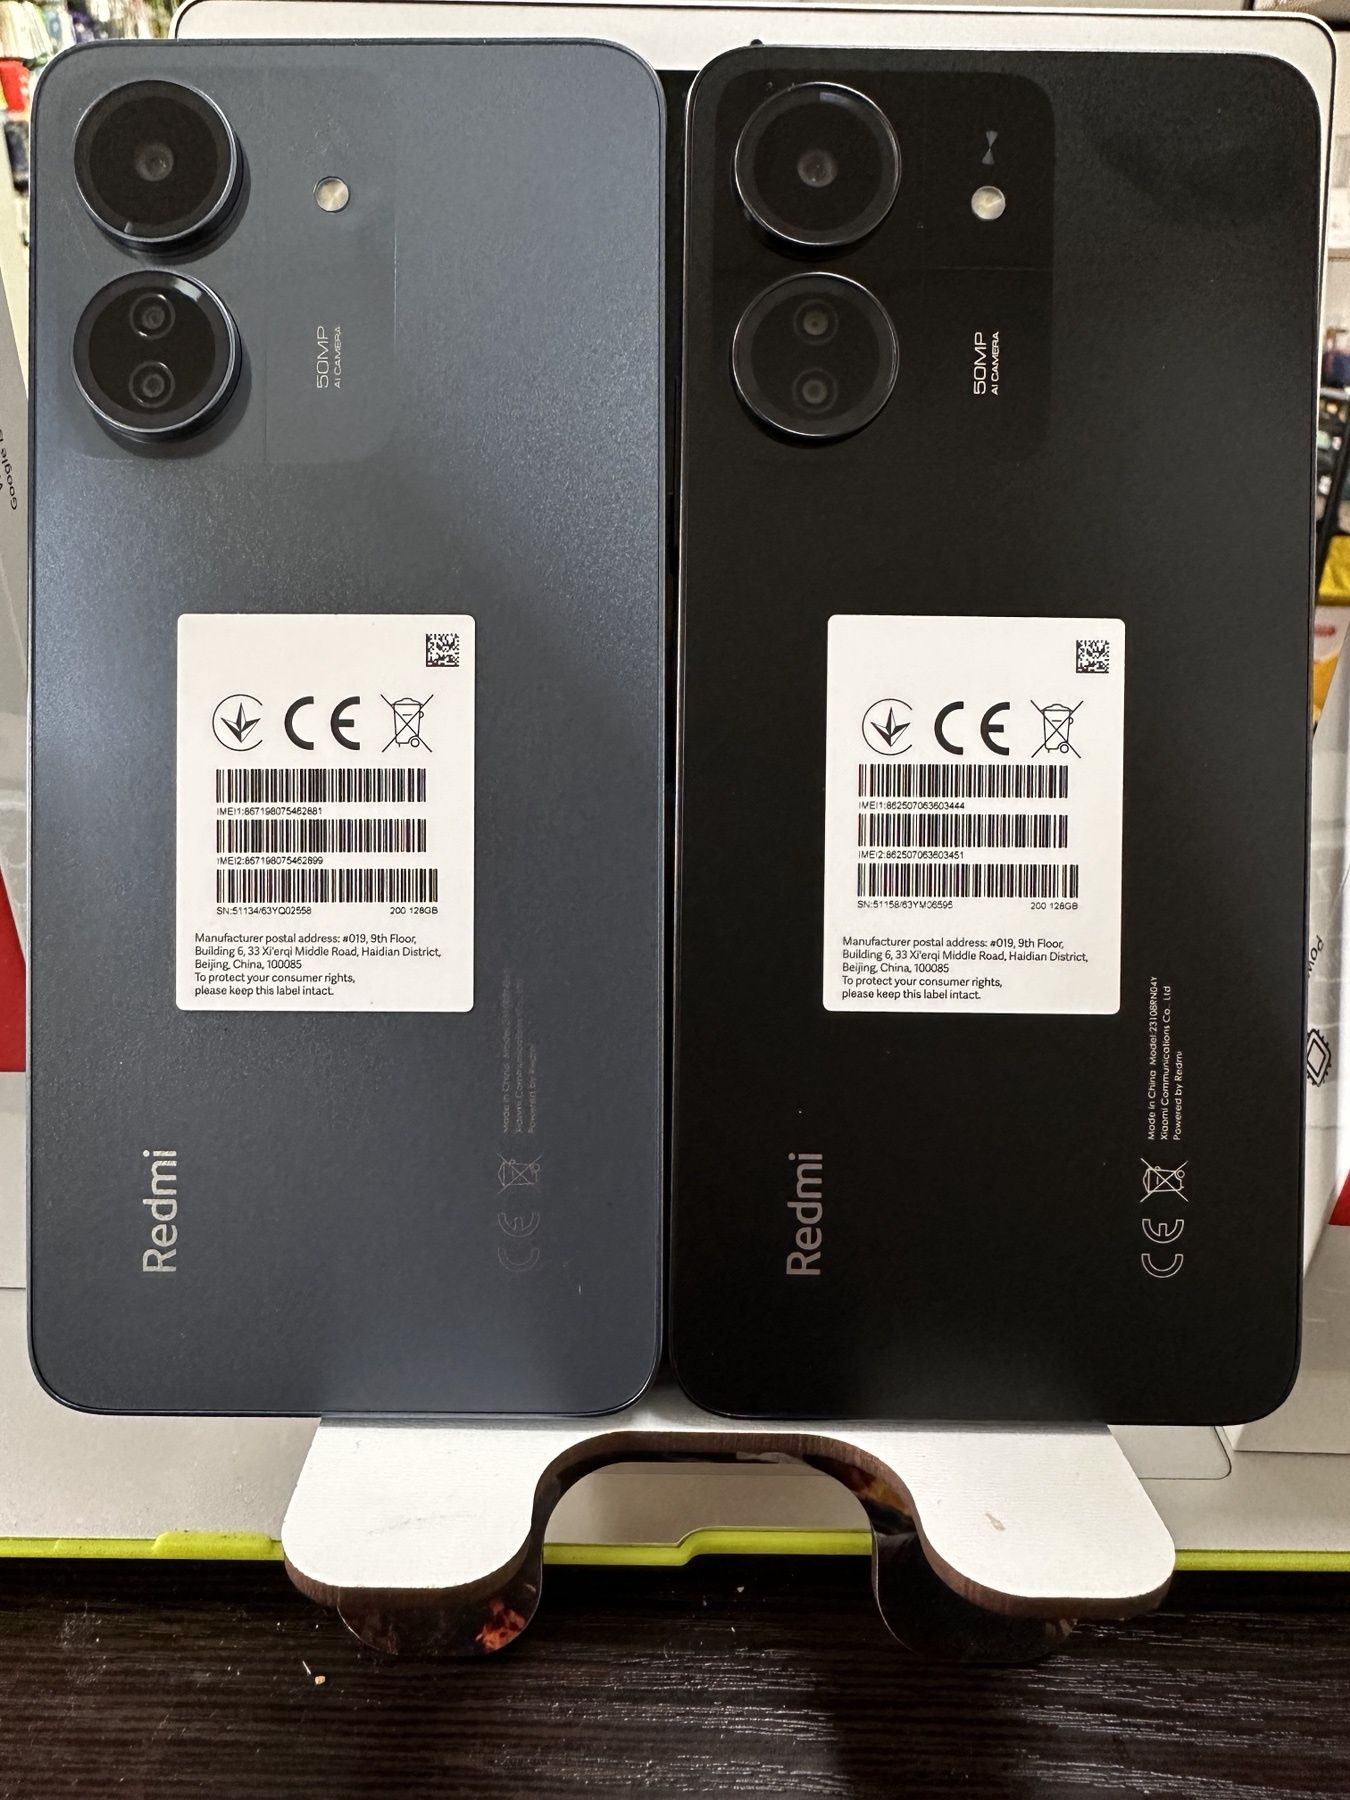 Xiaomi Redmi 13C 6/128 Black Global version NFC